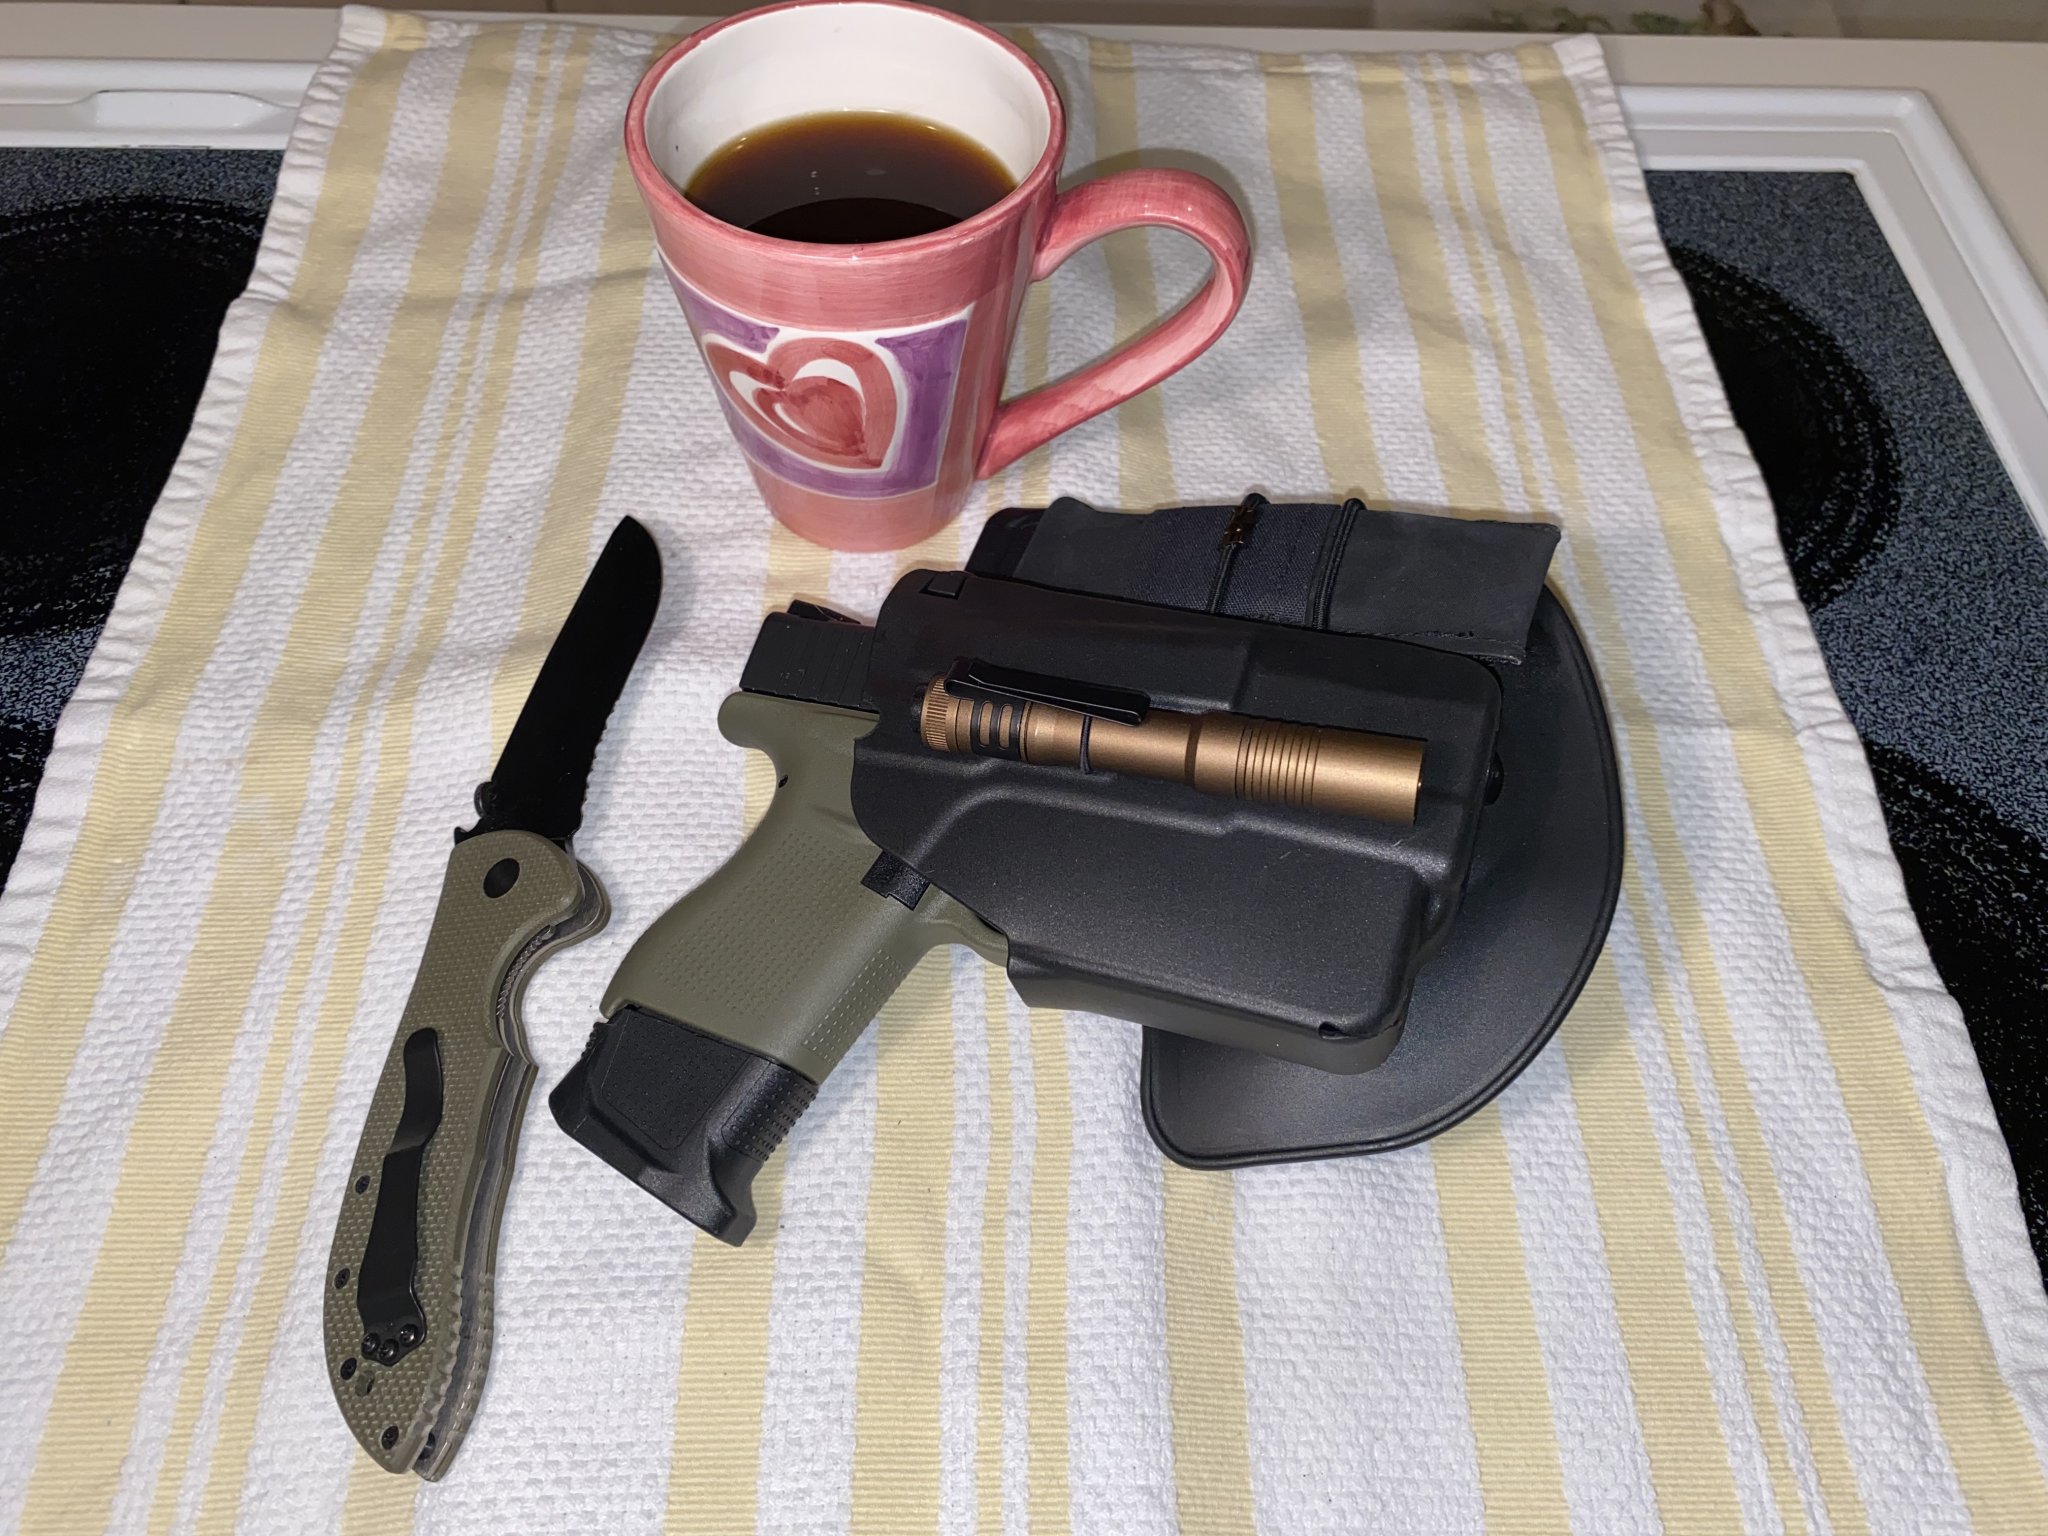 Glock 43 9 mm with Coffee Photos 2020IMG_7225 copy.jpg